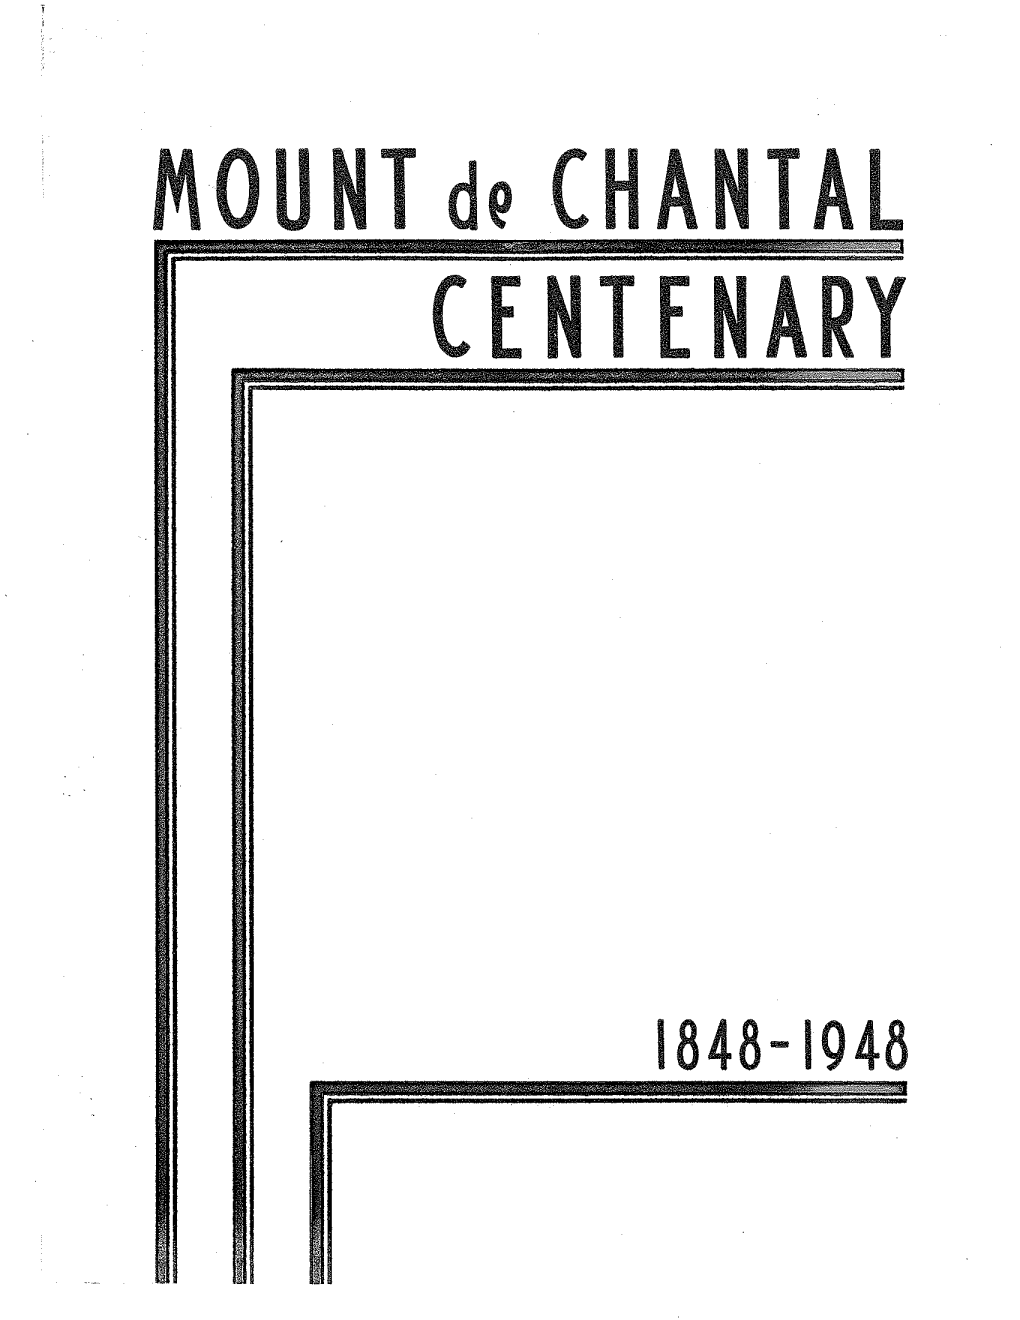 MOUNT De CHANTAL CENTENARY